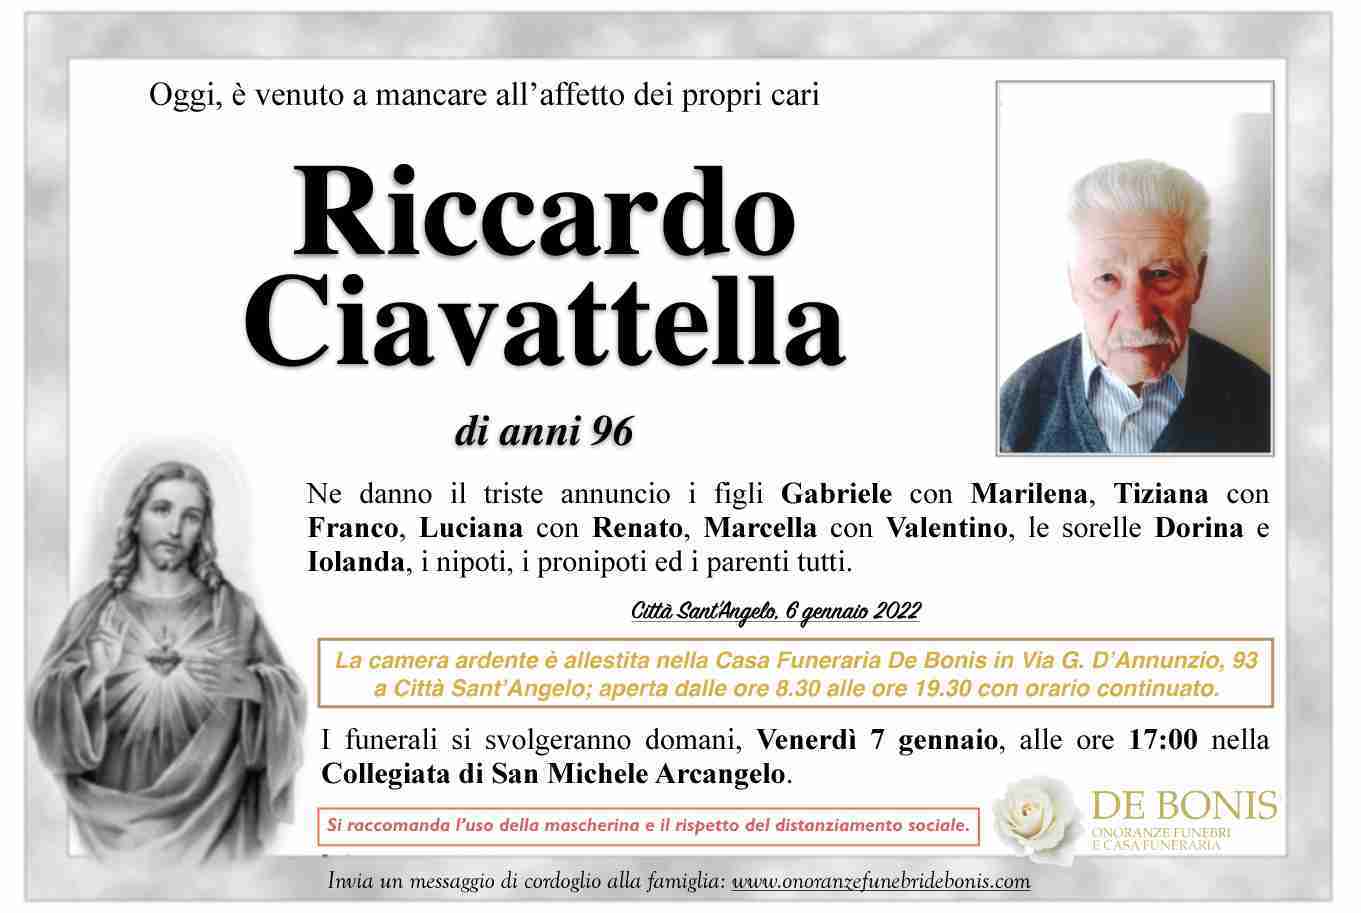 Riccardo Ciavattella